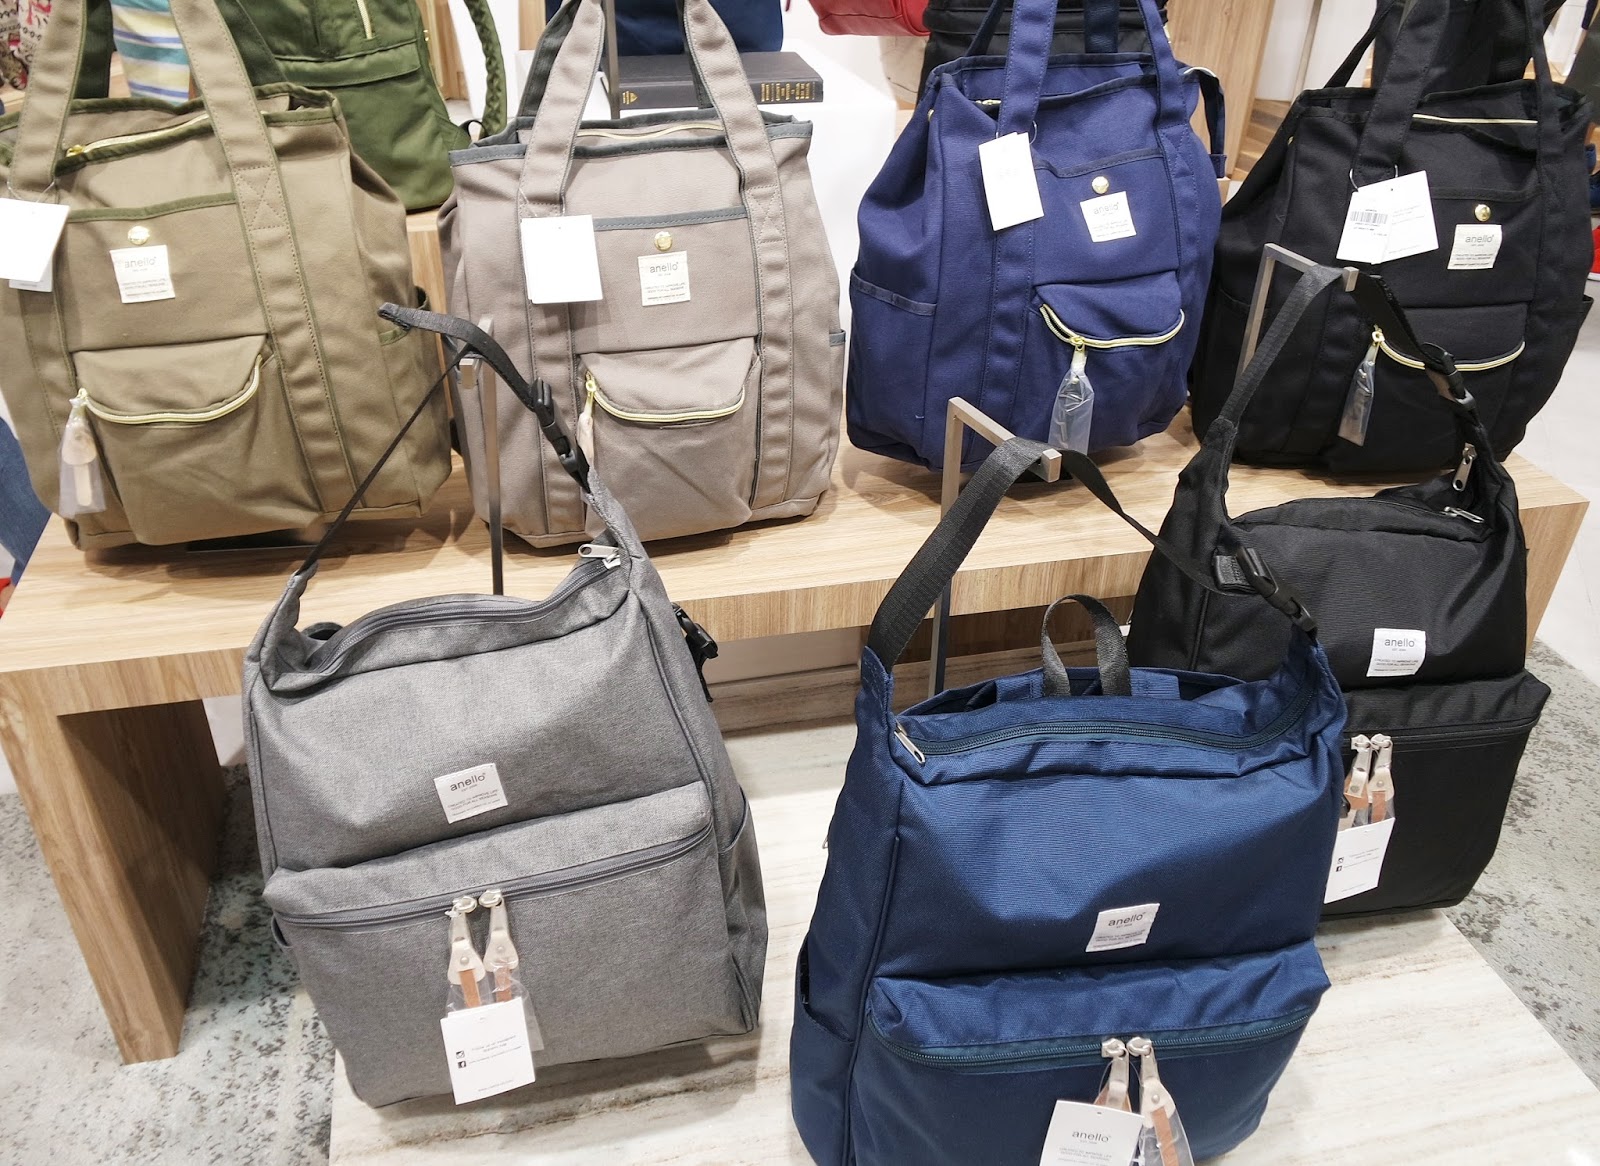 Anello Backpack, Shopping Bag, Anello Bag, Handbag